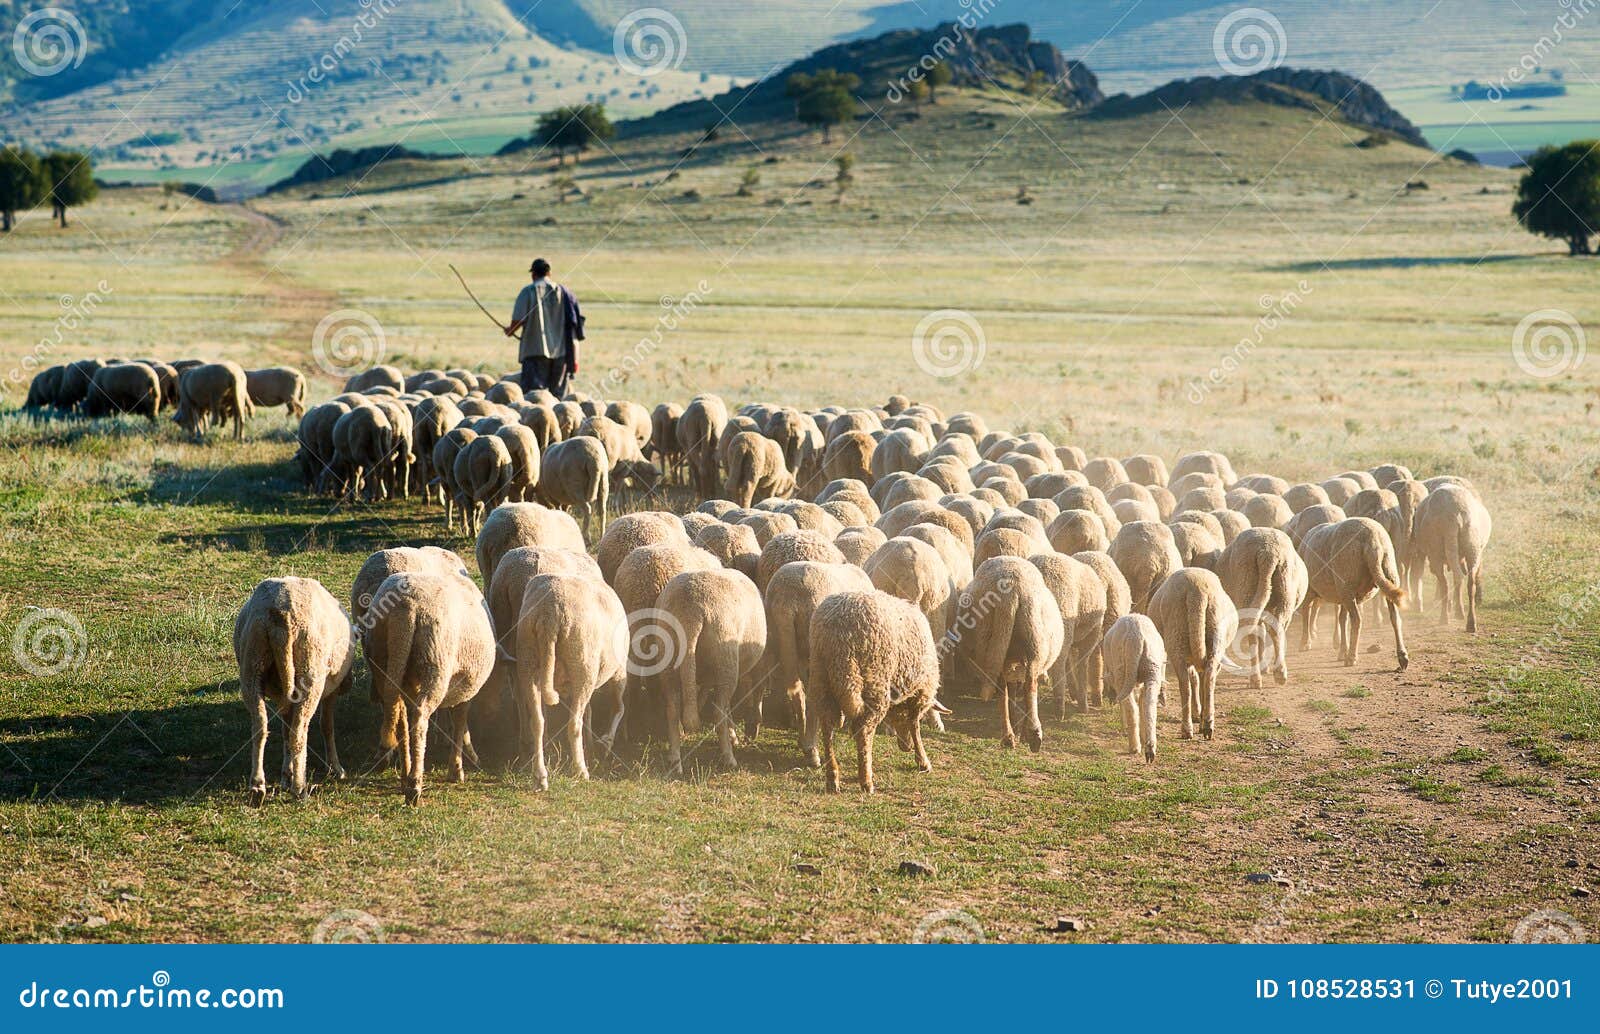 shepherd and herd of sheep